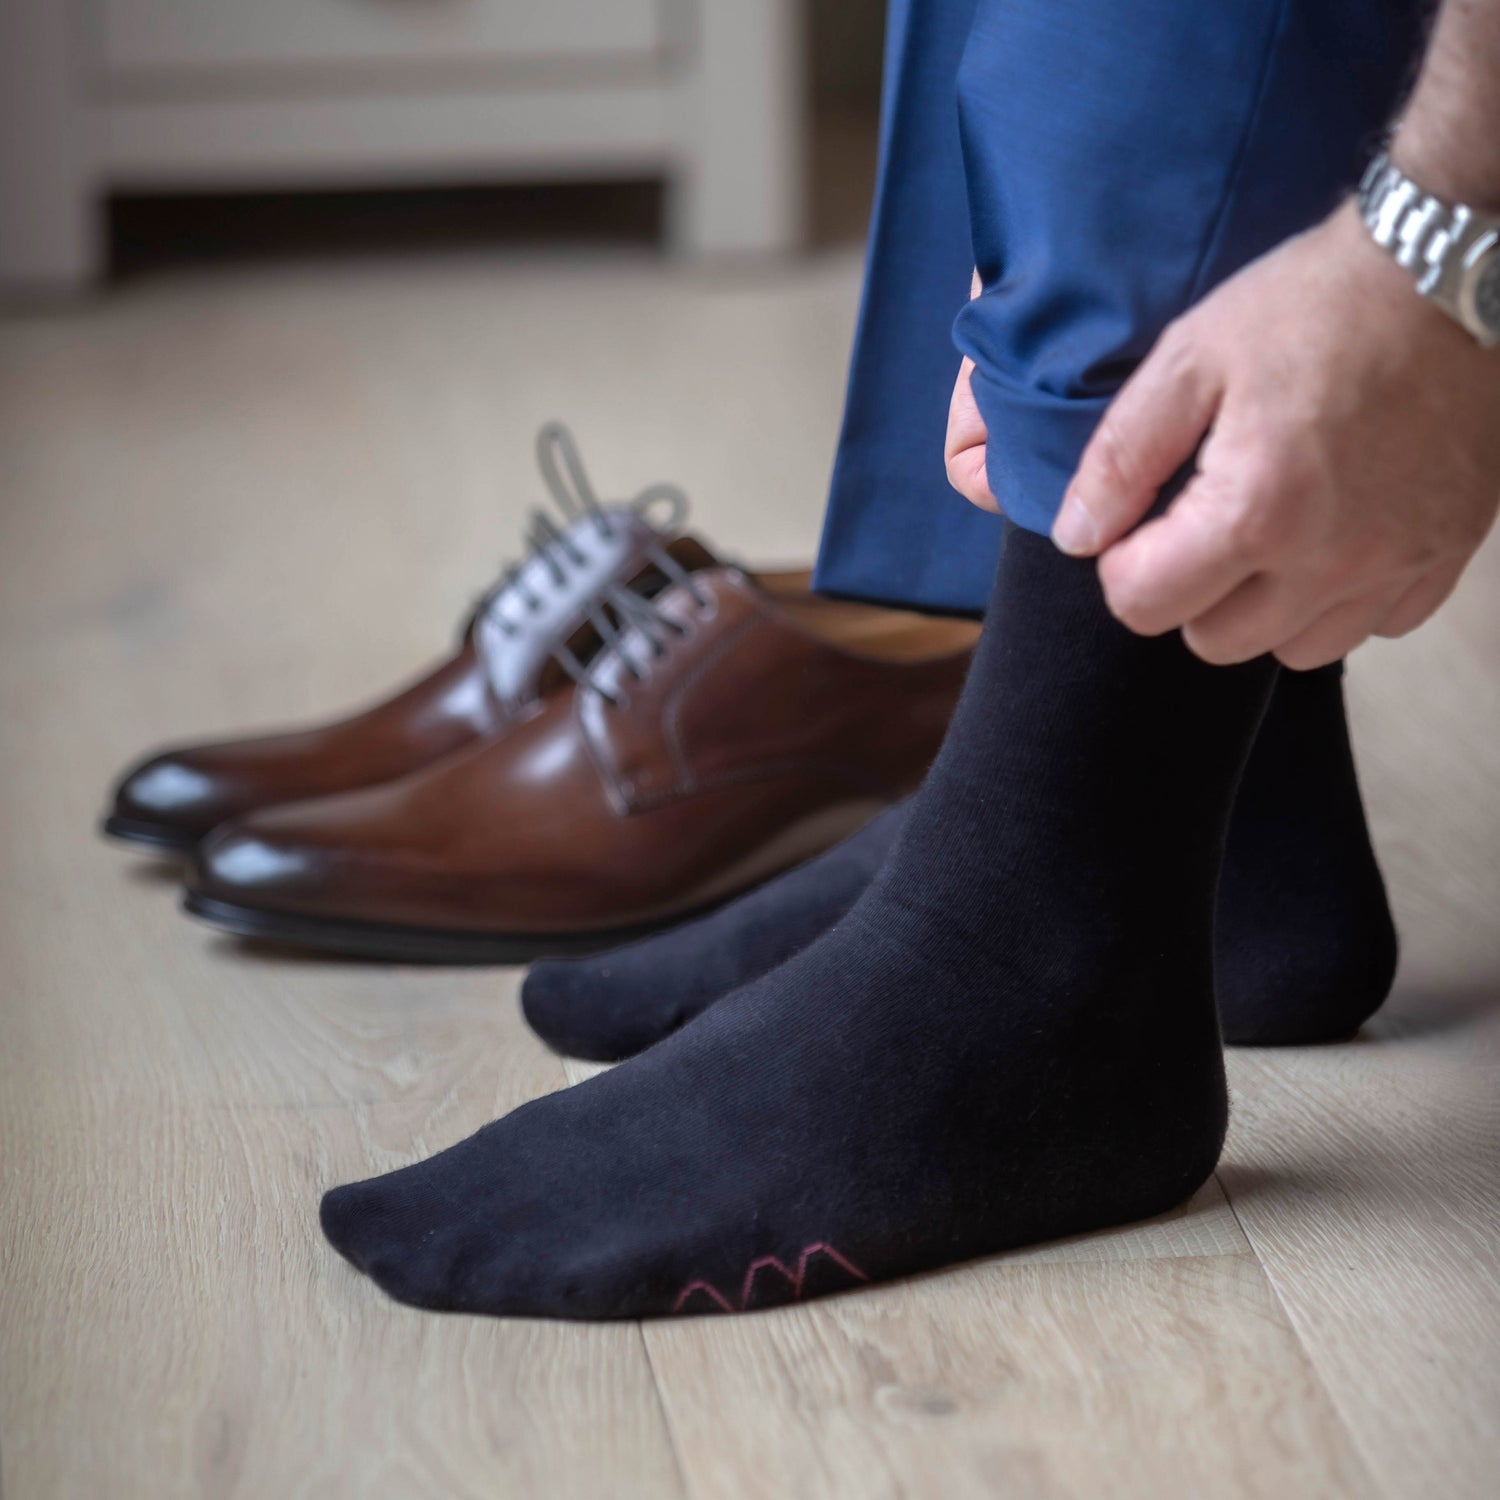 A_Week_Of_Socks_Socks_square_mid-calf_suit